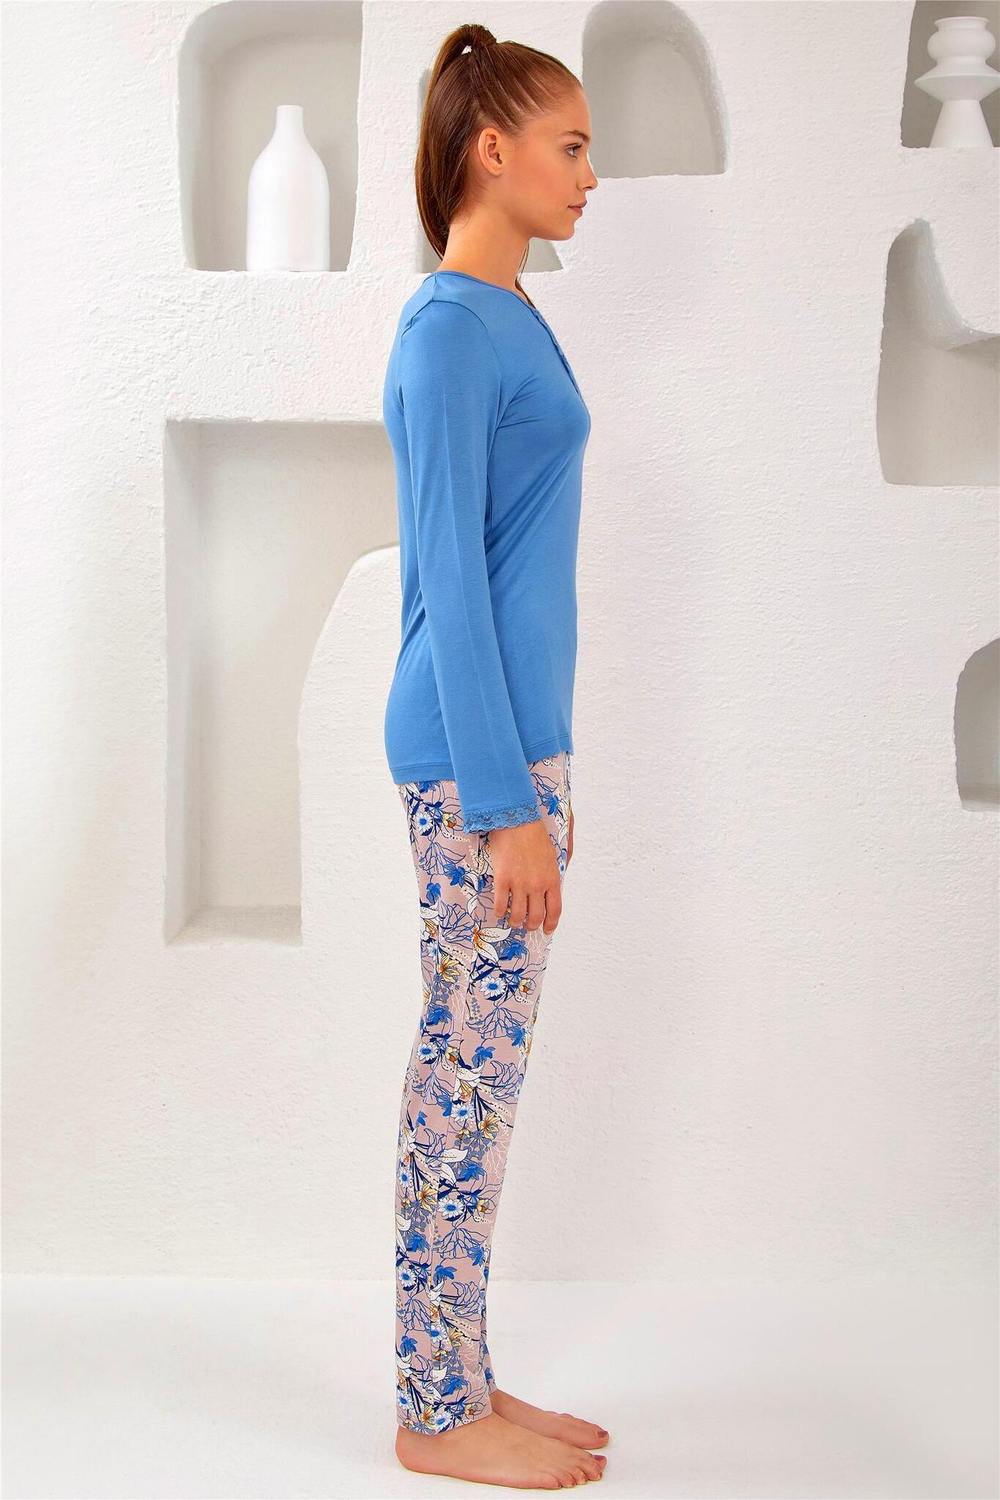 RELAX MODE - Женская пижама с брюками - 10763